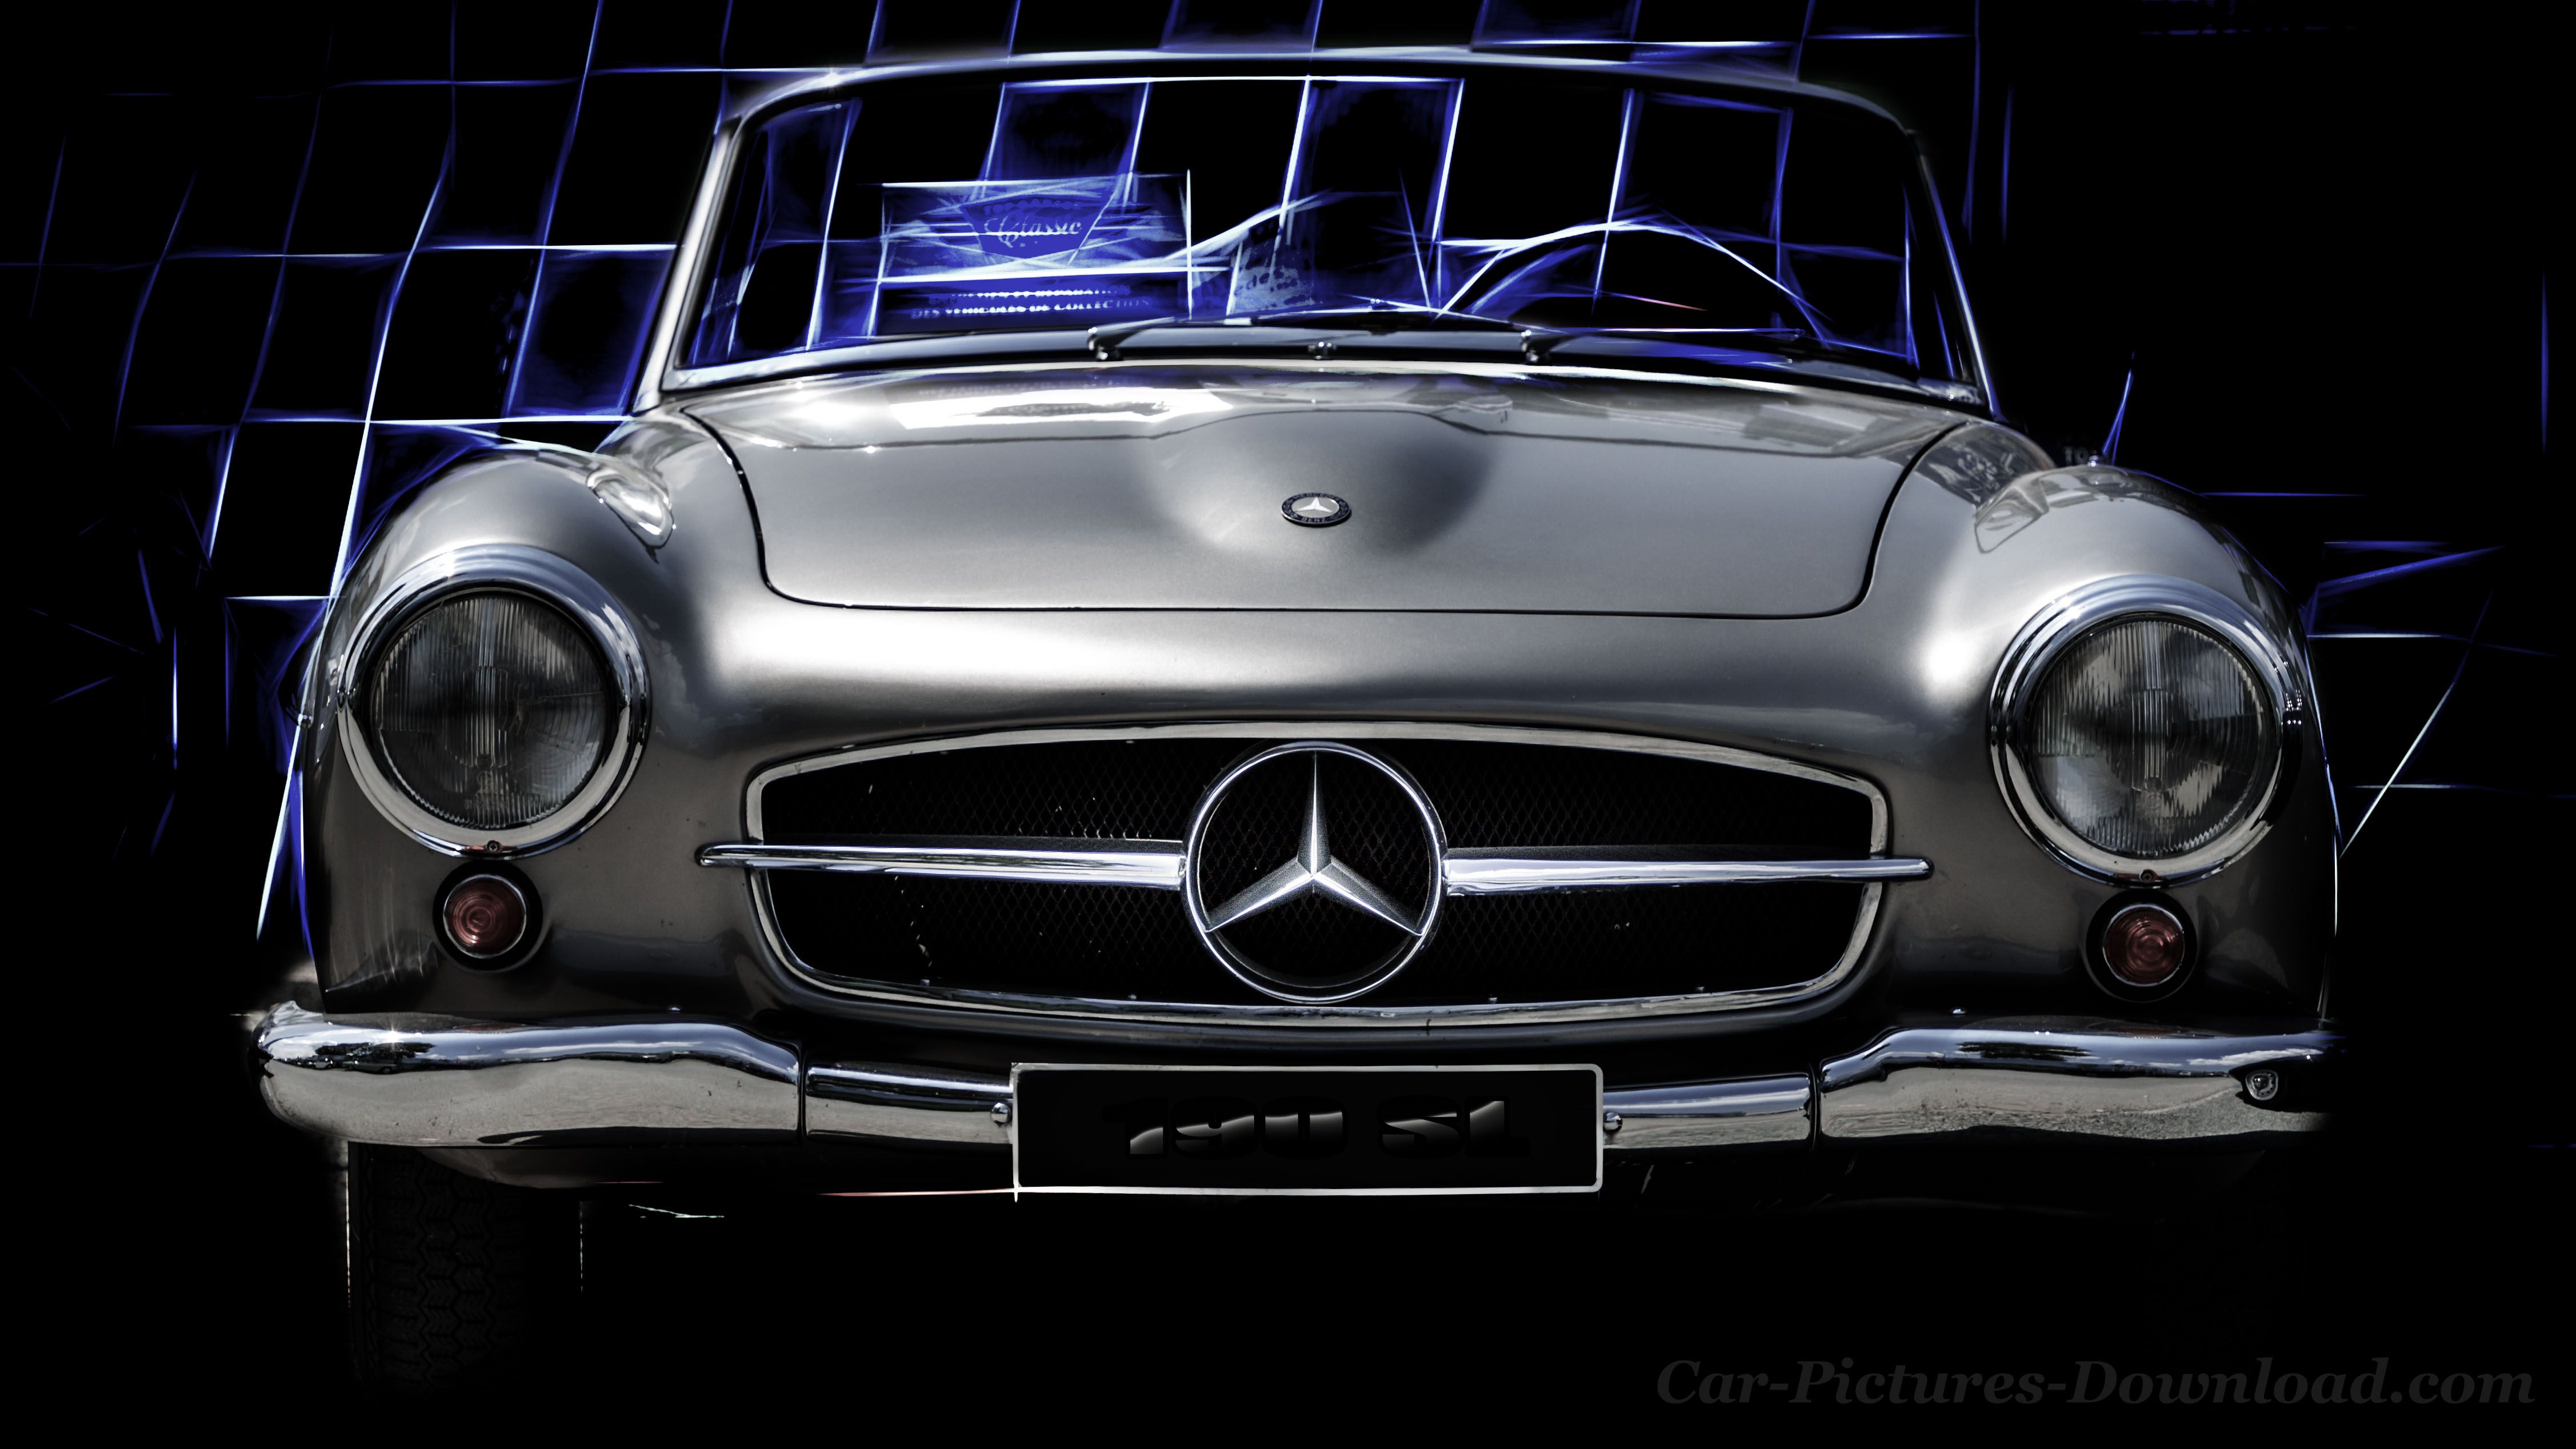 Mercedes Benz Wallpaper Image & Mobile UHD Download